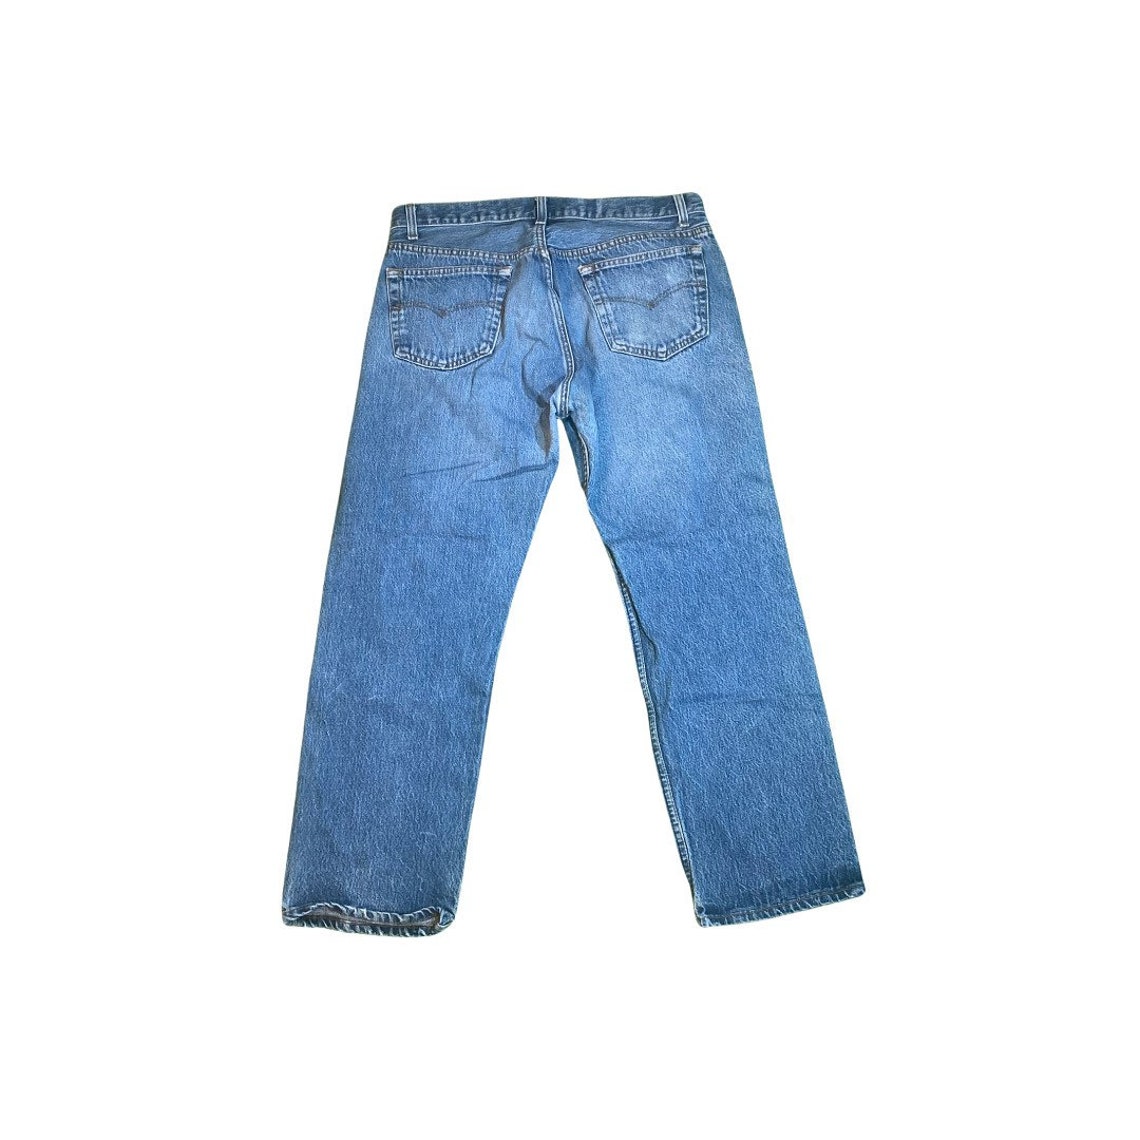 Vintage 80's Levis 501 Acid Wash Jeans Measures 34x28 High | Etsy